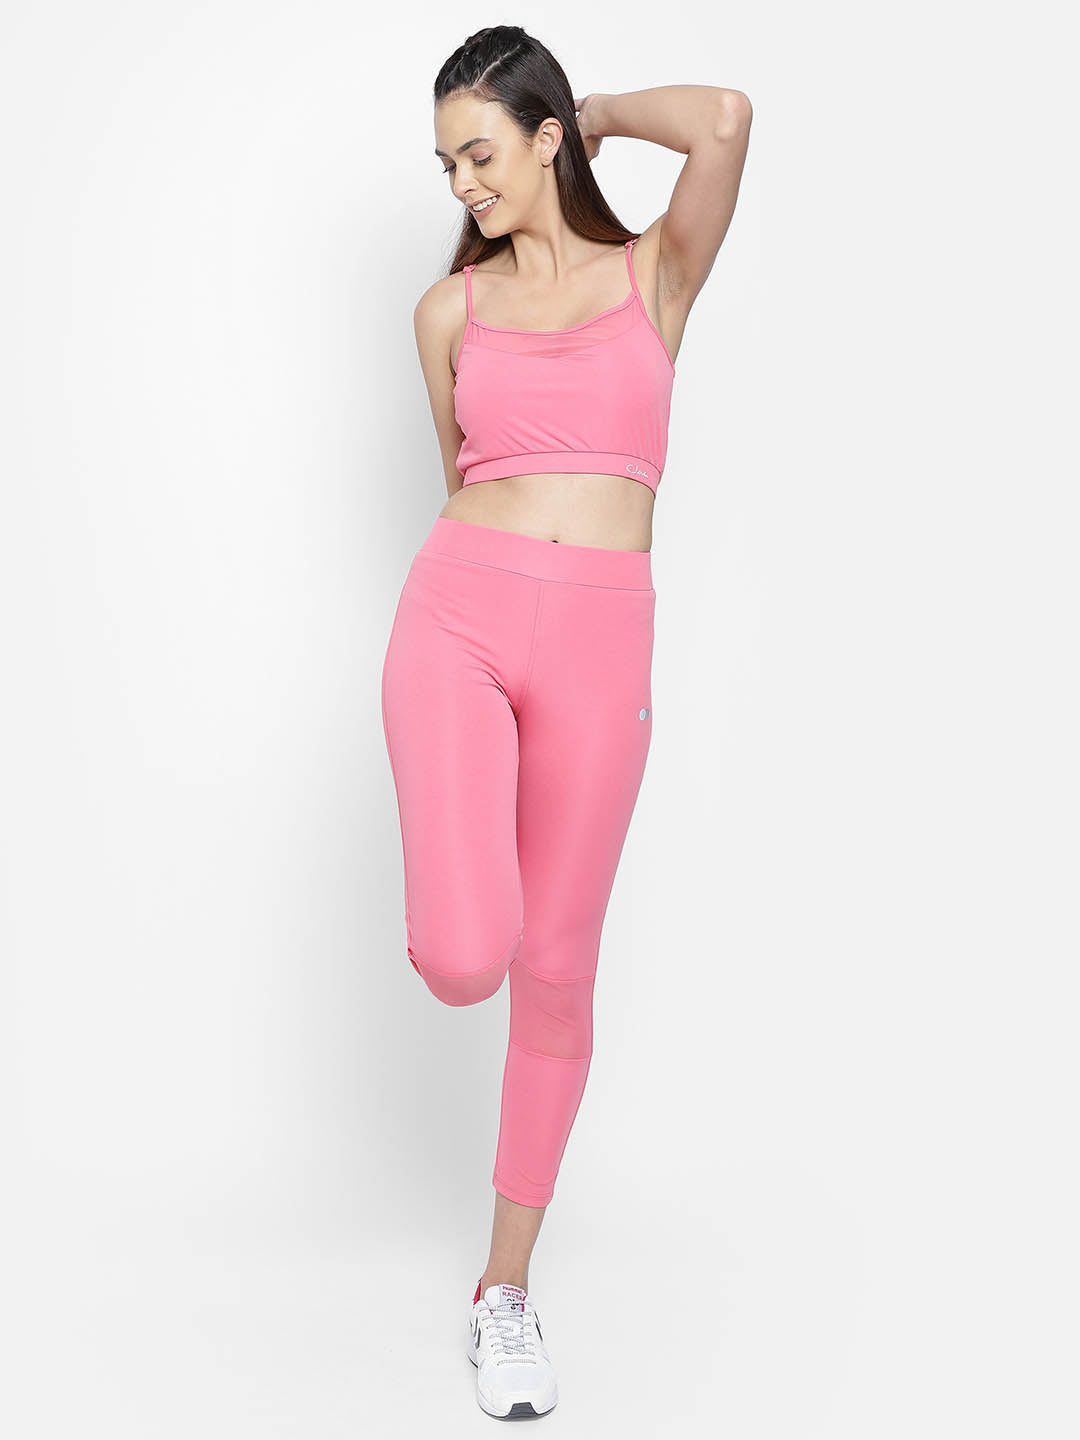 Figs Mauve Pink Performance Underscrub Set sports-bra leggings XL 🎀  Limited Ed.